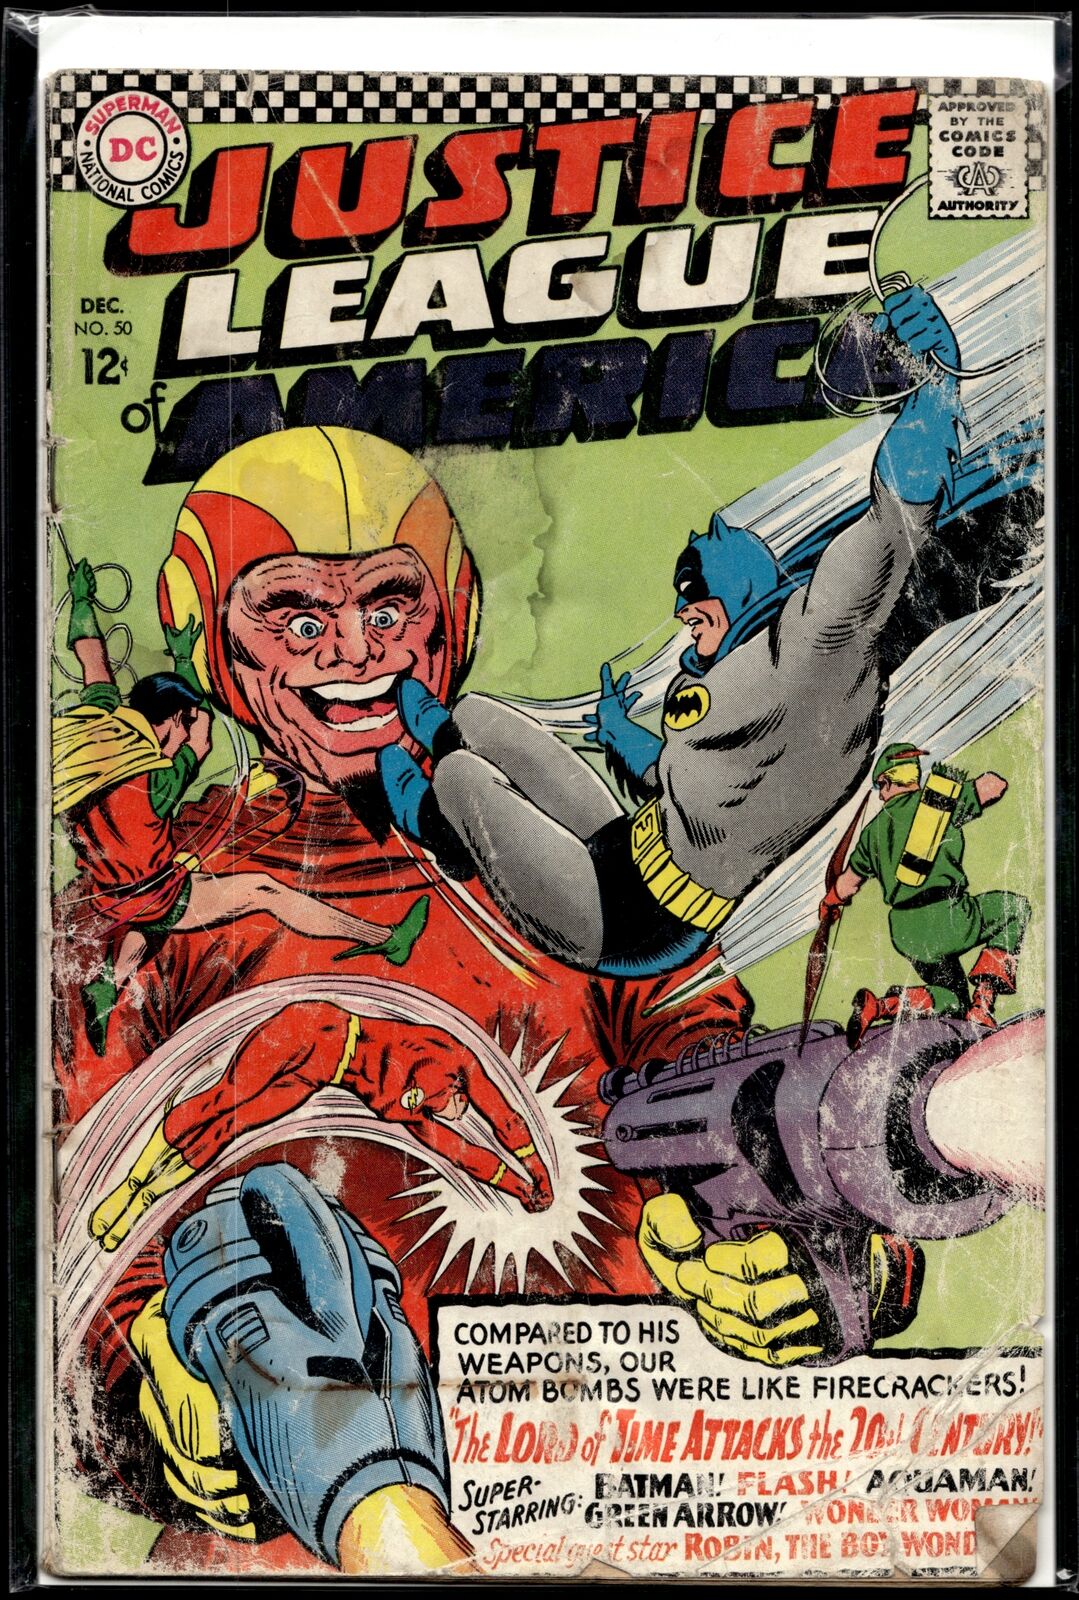 1966 Justice League of America #50 DC Comic